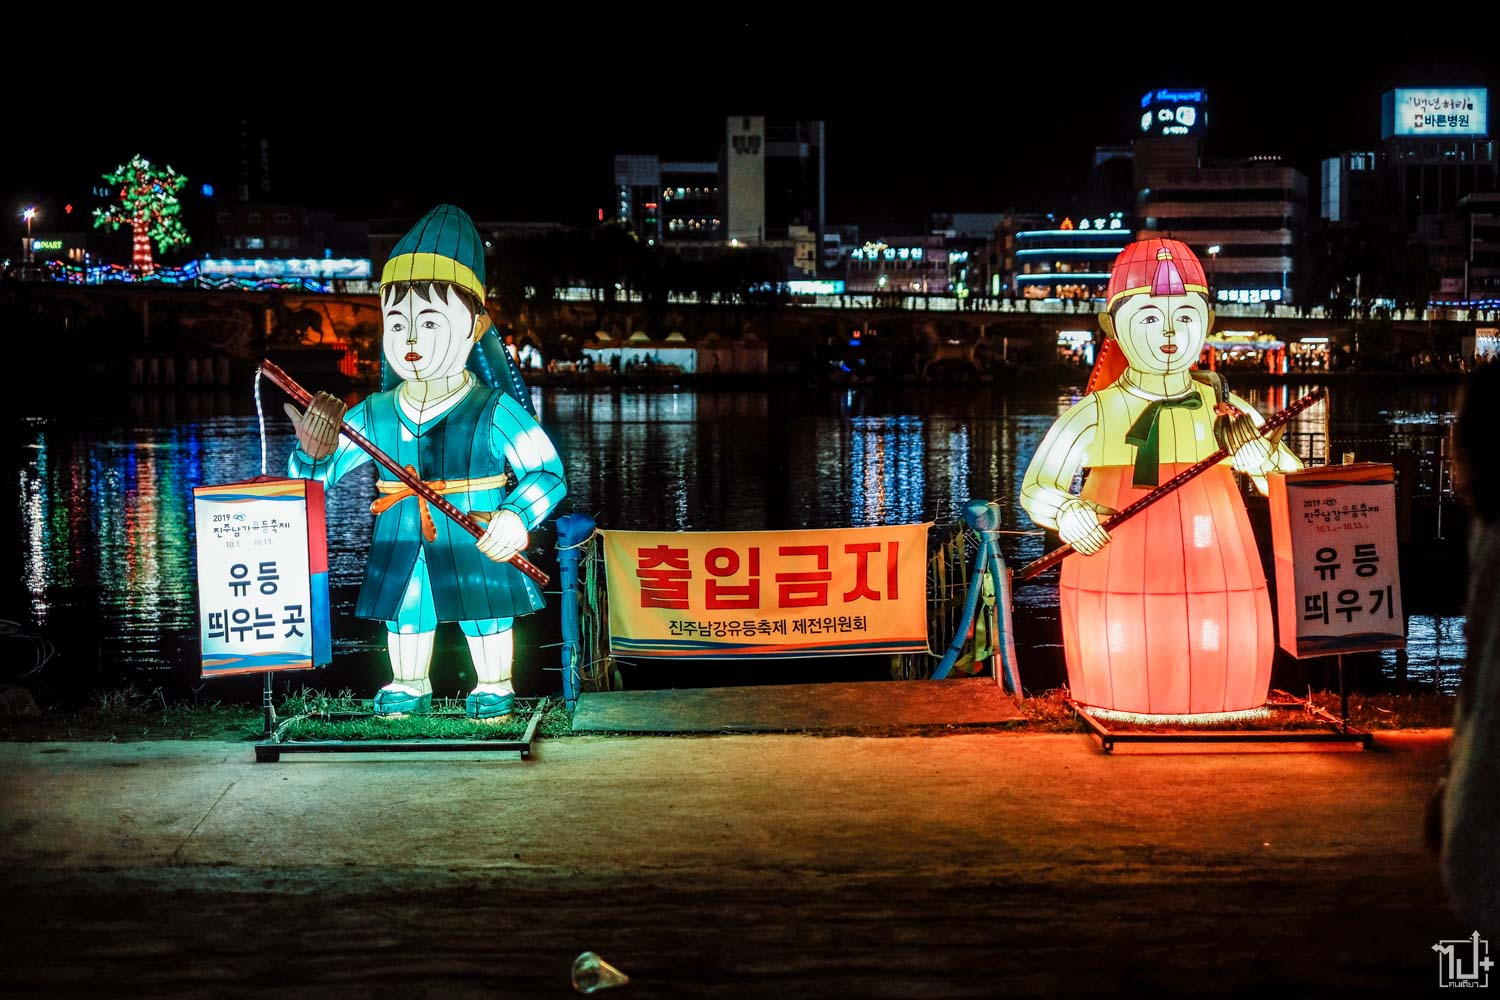 Korea, LoveKorea, KTOThailand, ImagineYourKorea, Busan, JinjuNamgangYudeungFestival, AndongMaskDanceFestival , Festival, GamcheonCultureVillage, เกาหลีใต้, ปูซาน